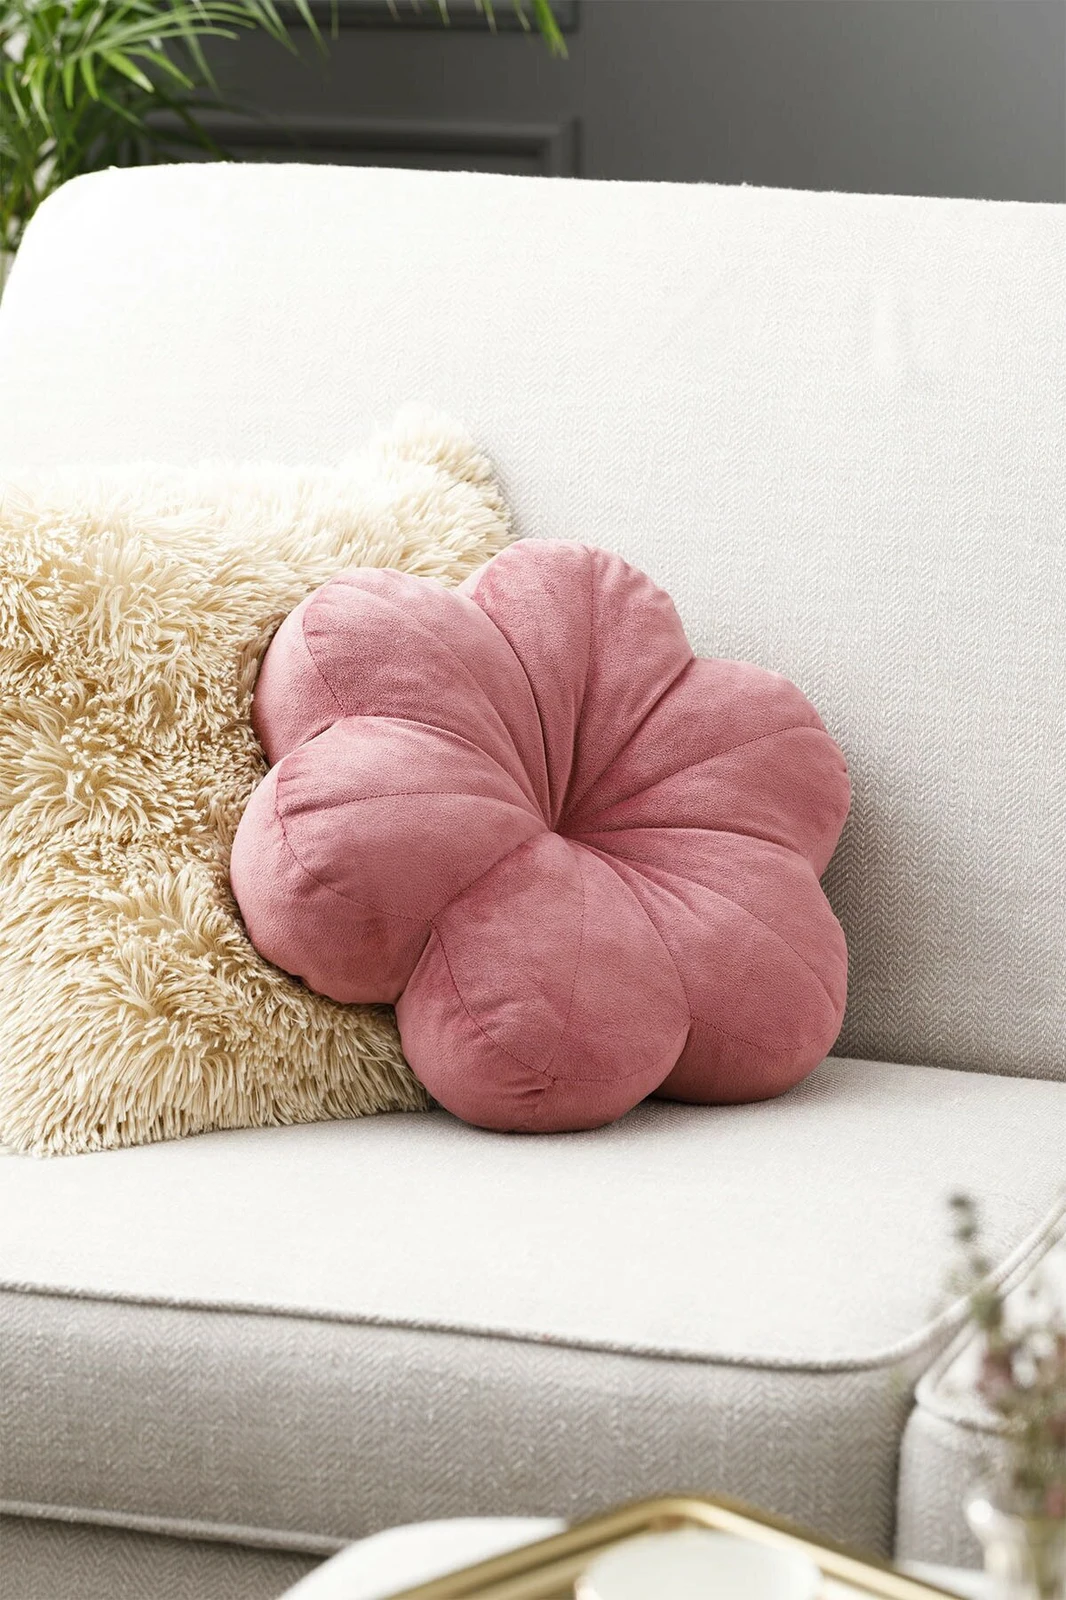 Bloom Velvet Filled Pillow 40x40 Cm Home Decoration Bedroom Livingroom Pillow Gift Sofa Car Decorative Accessories Creative